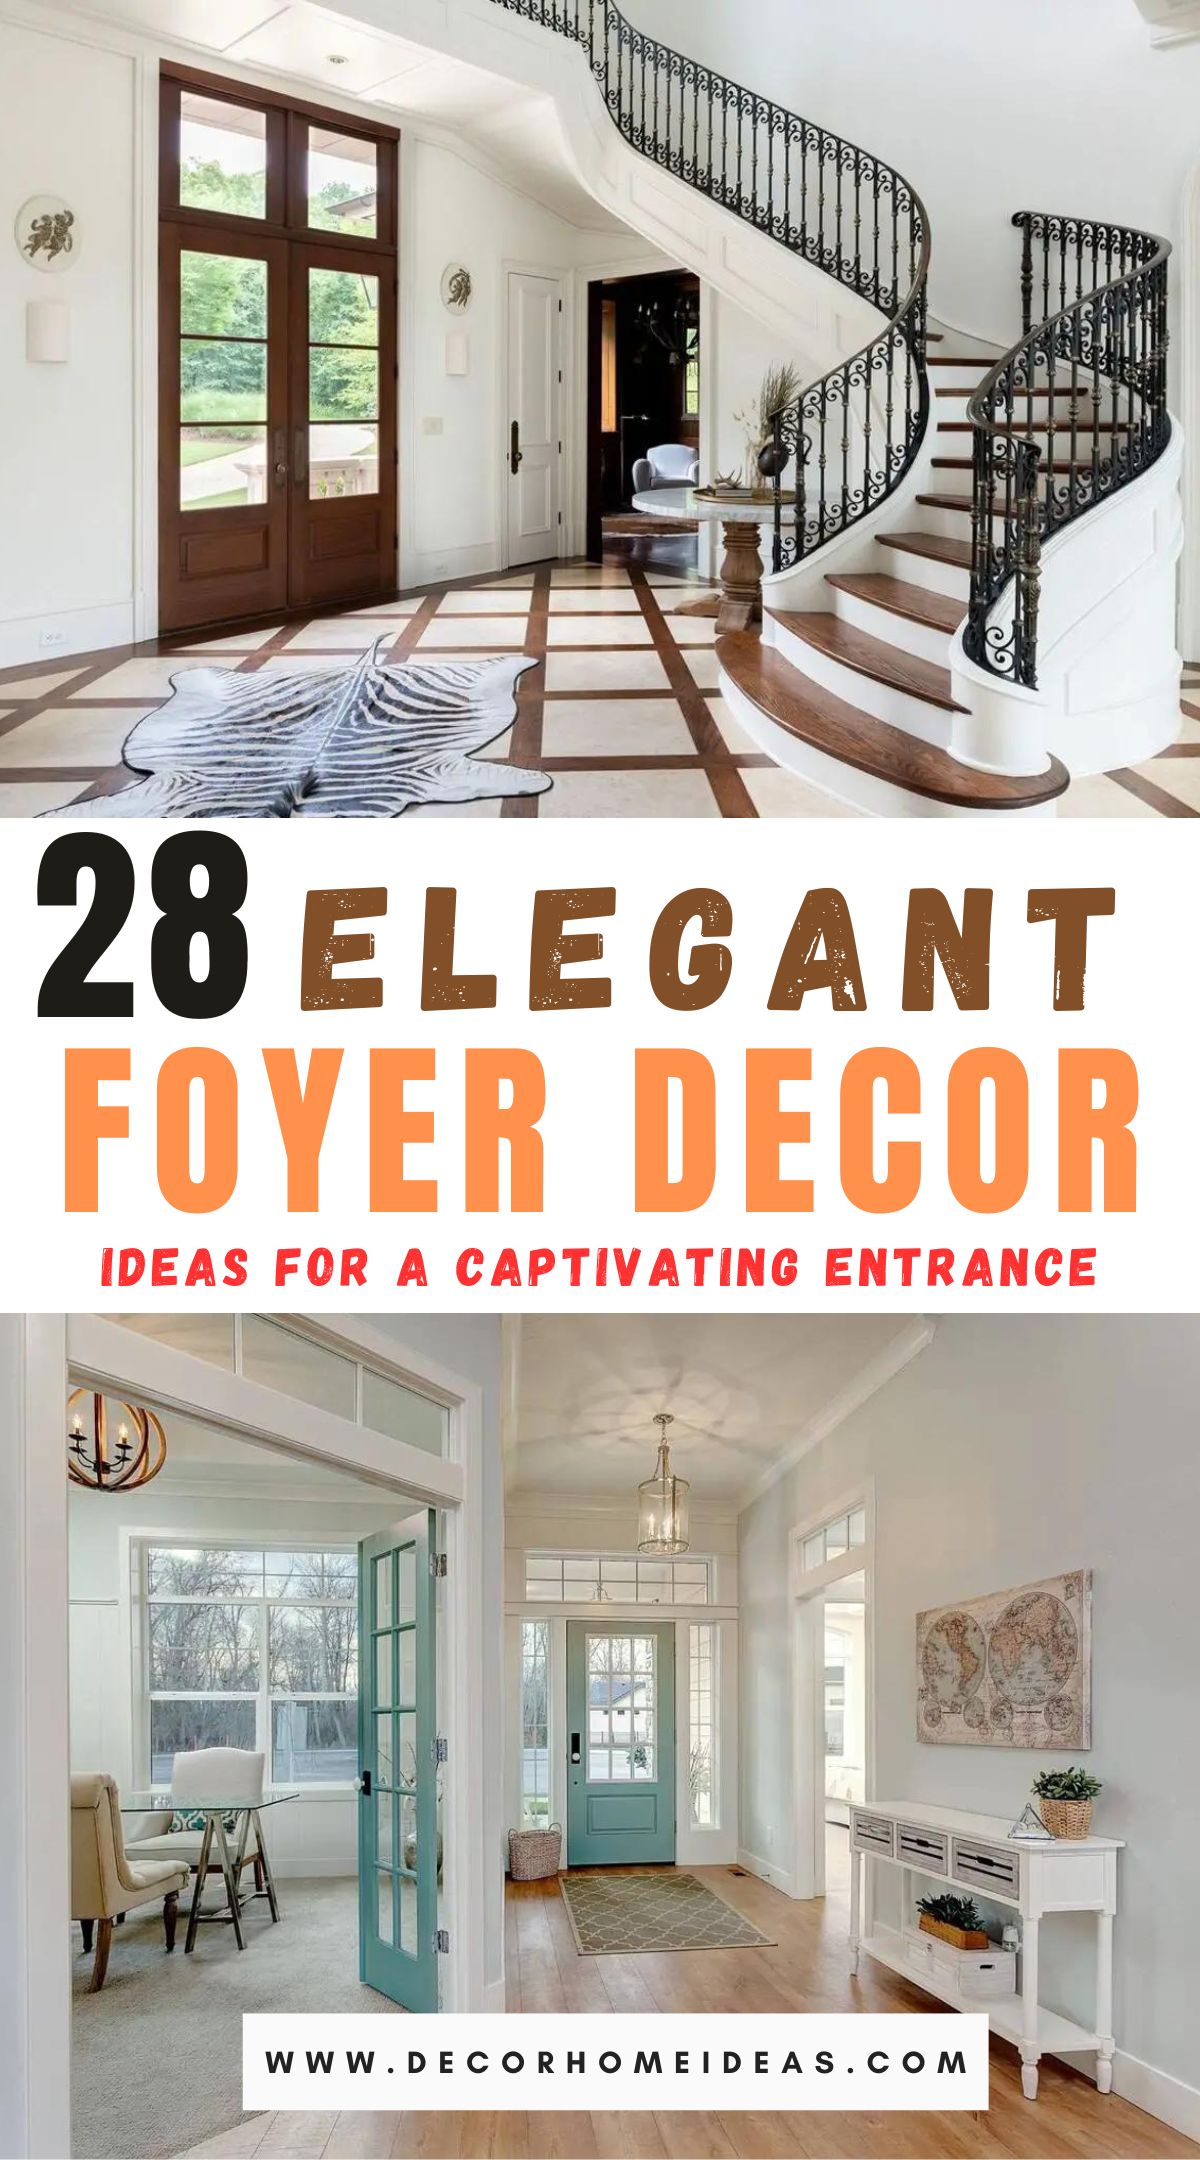 Best Foyer Decor Ideas